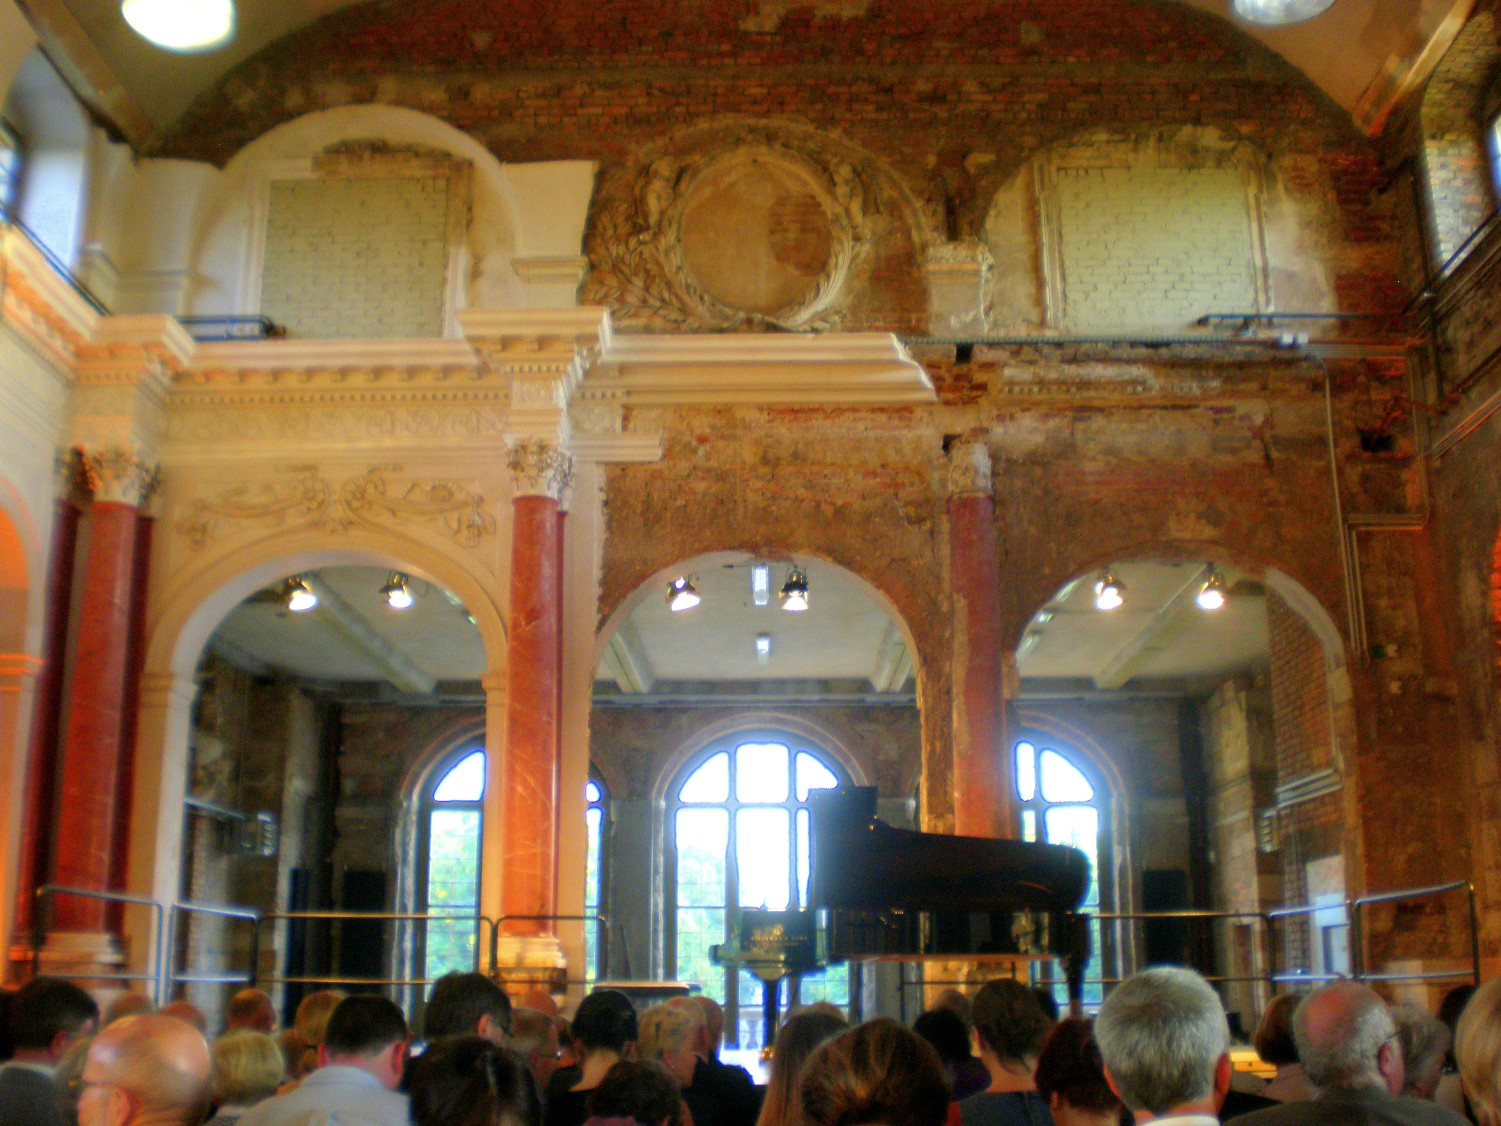 Interior of Palais in Garten, Dresden